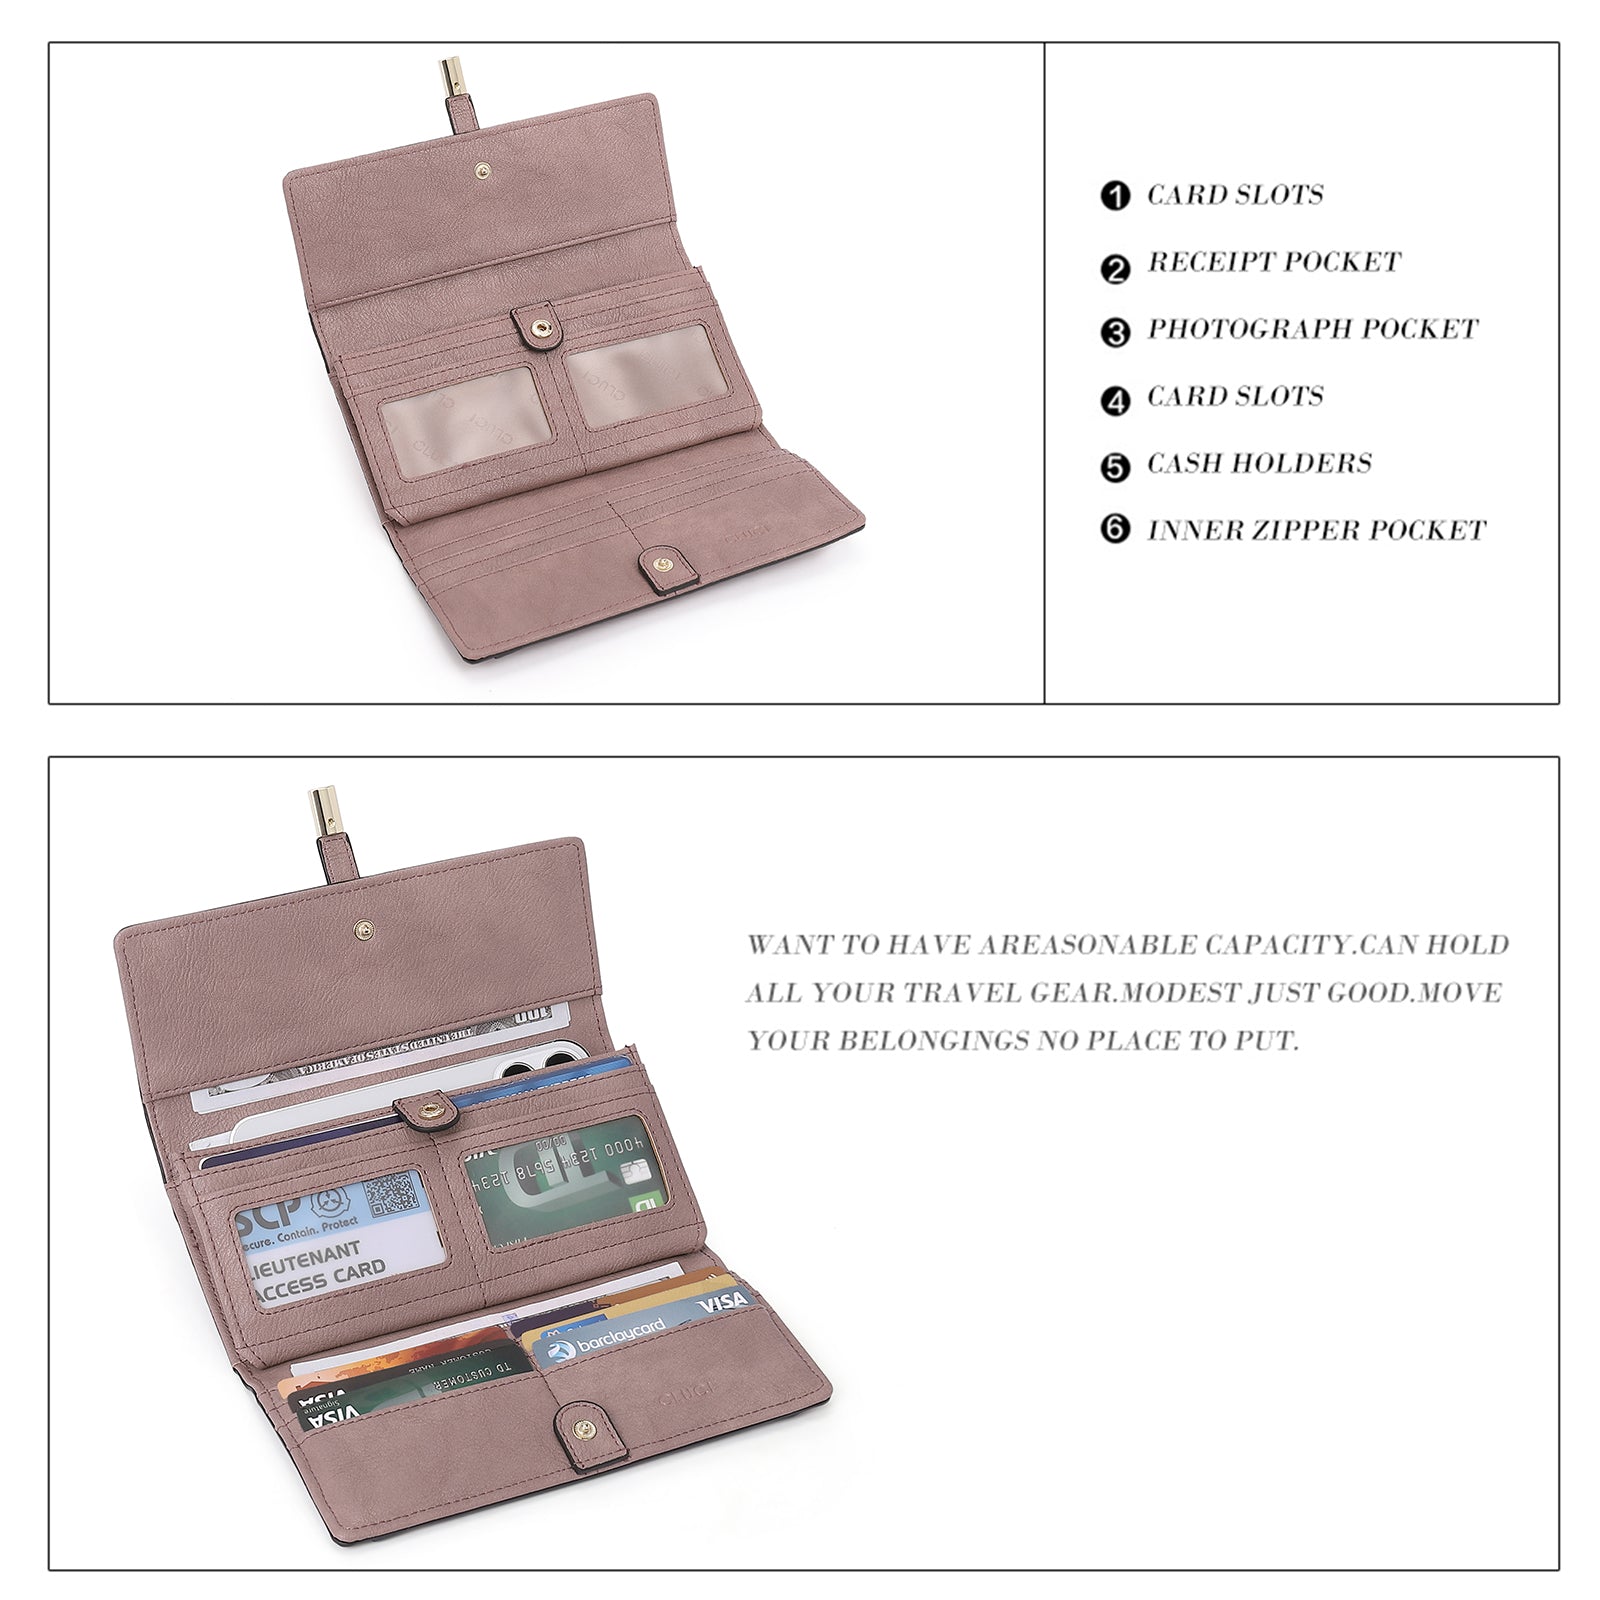 CLUCI Leather Wallet for Women Slim Designer Trifold Ladies Credit Card Holder, Purple